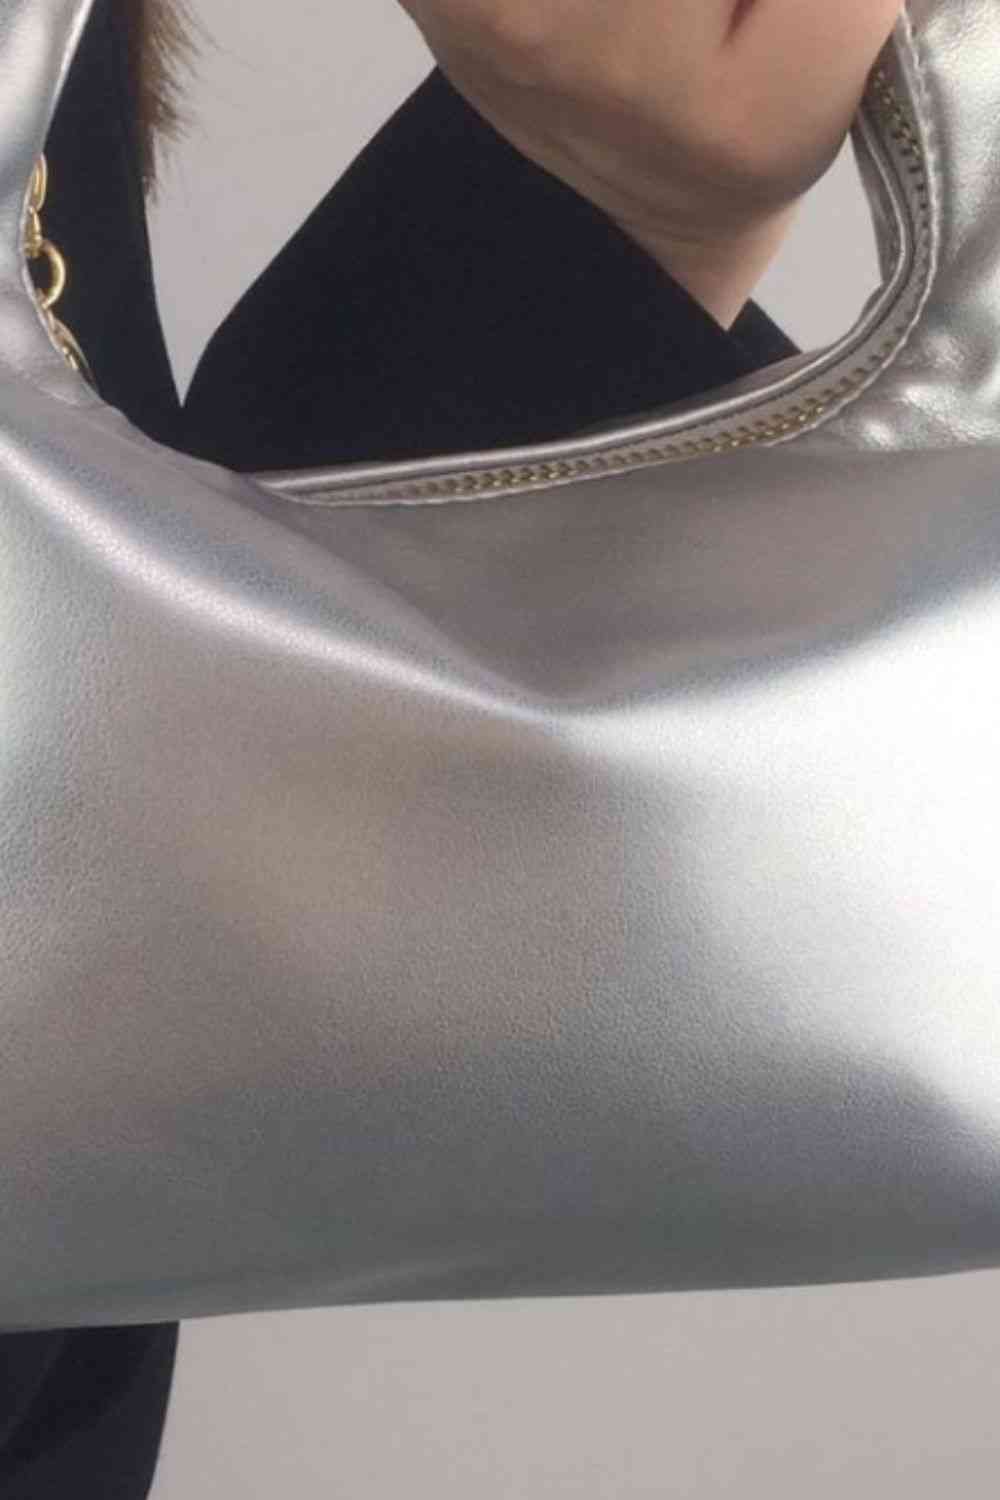 Adored PU Leather Pearl Handbag - Just Enuff Sexy